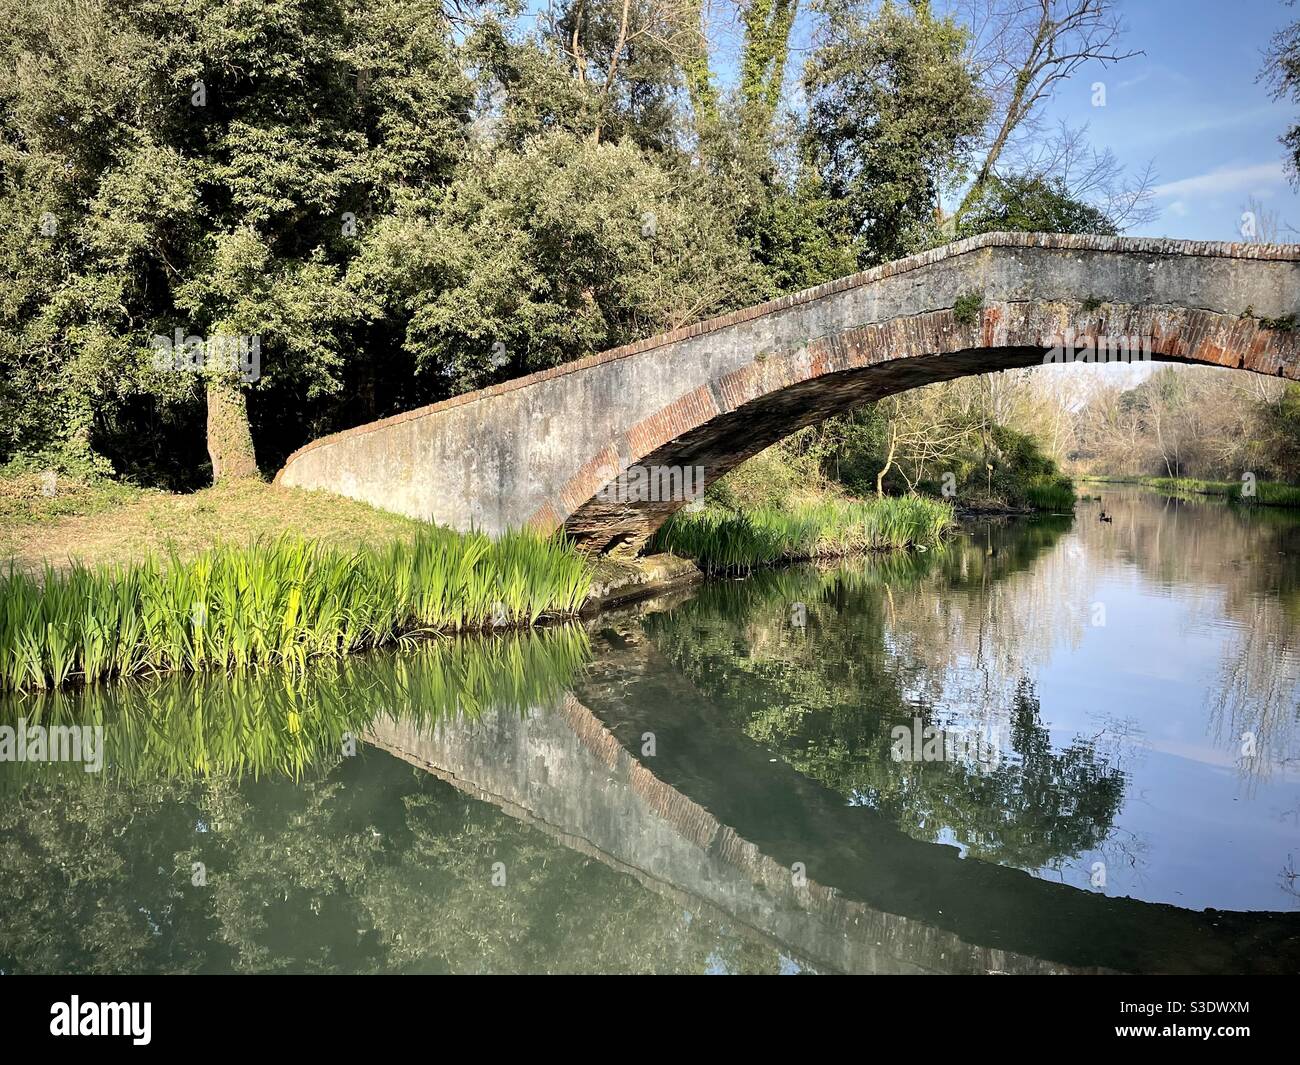 Old bridge on a stream inside Versiliana park in Marina di Pietrasanta, Lucca, Italy. Stock Photo